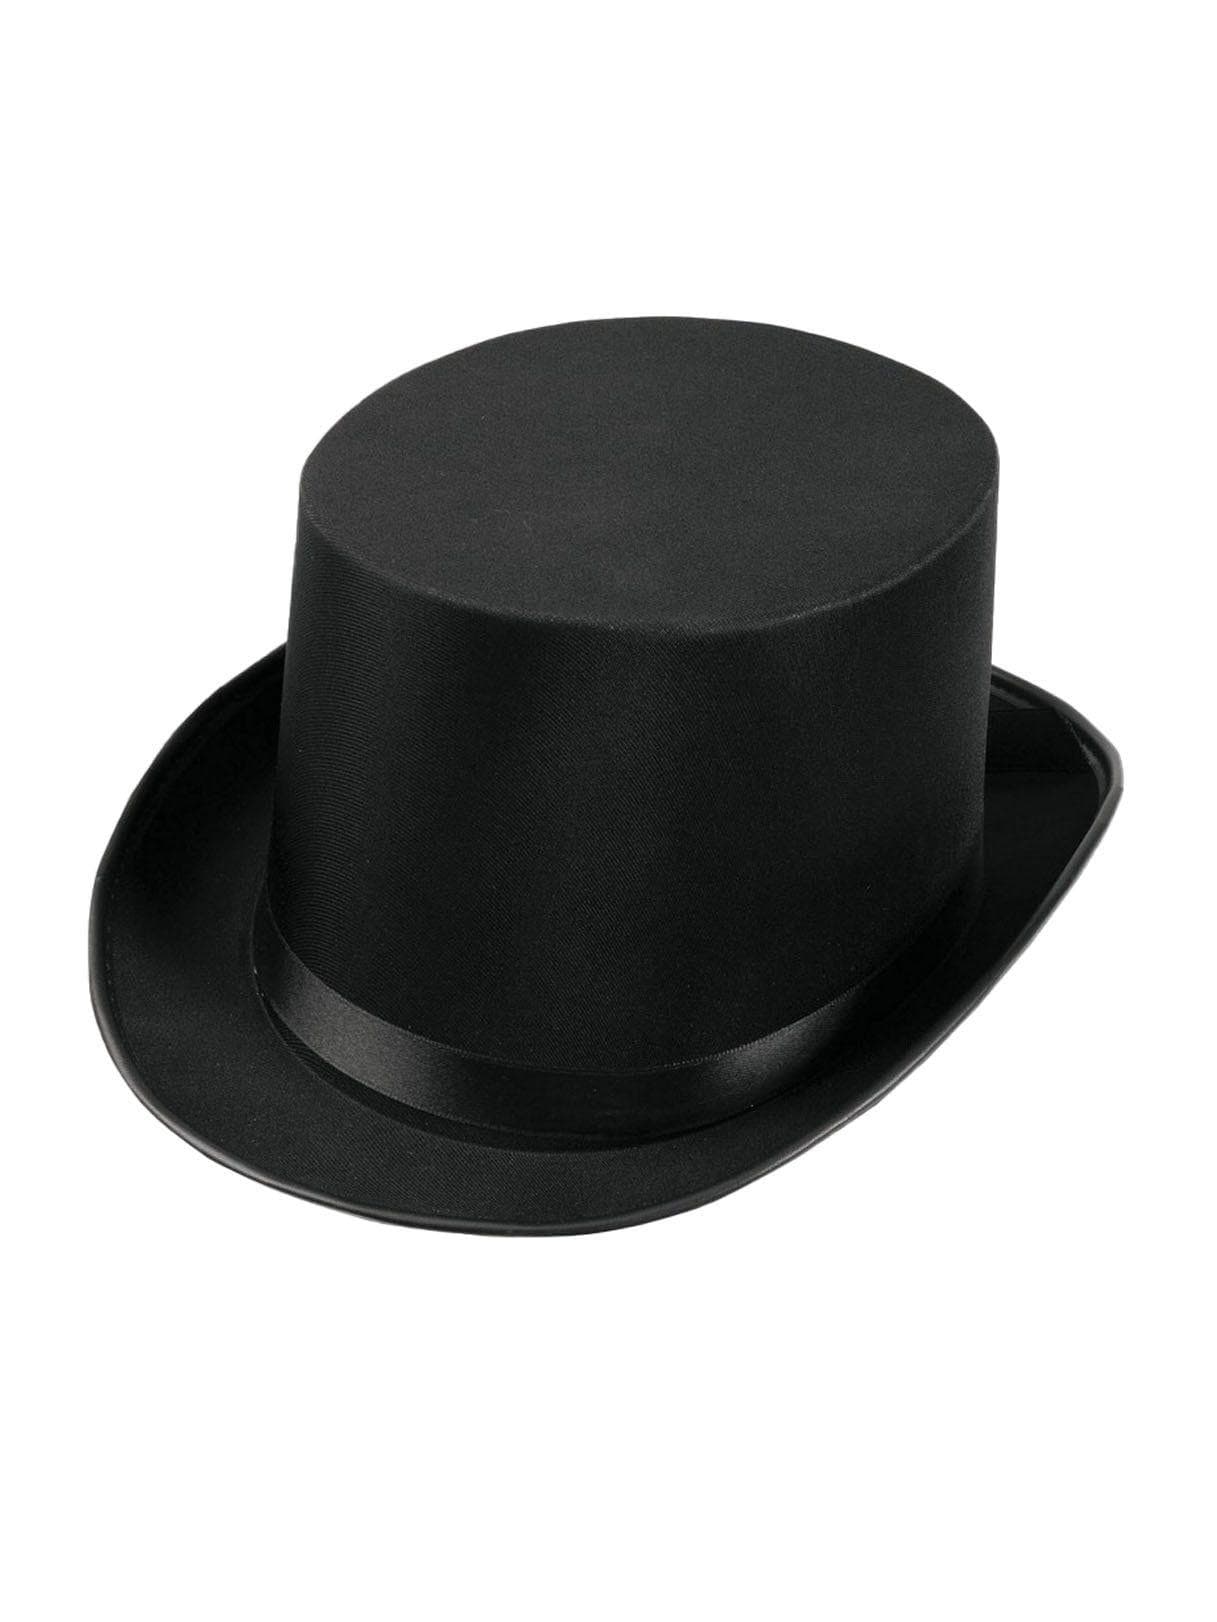 Adult Black Classic Top Hat - Deluxe - costumes.com